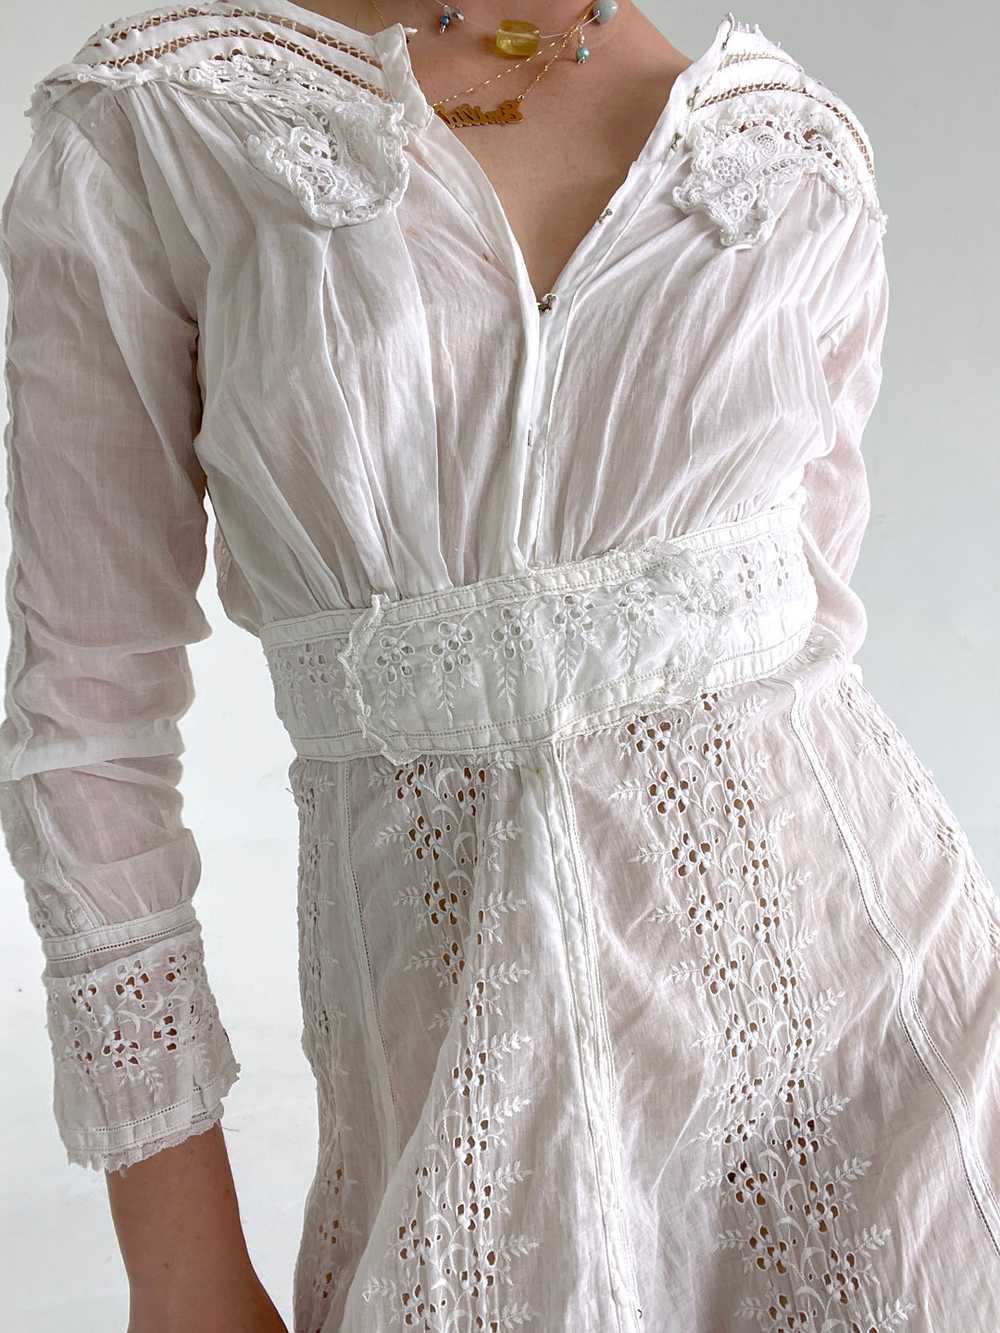 Victorian White Cotton Lawn Dress - image 5